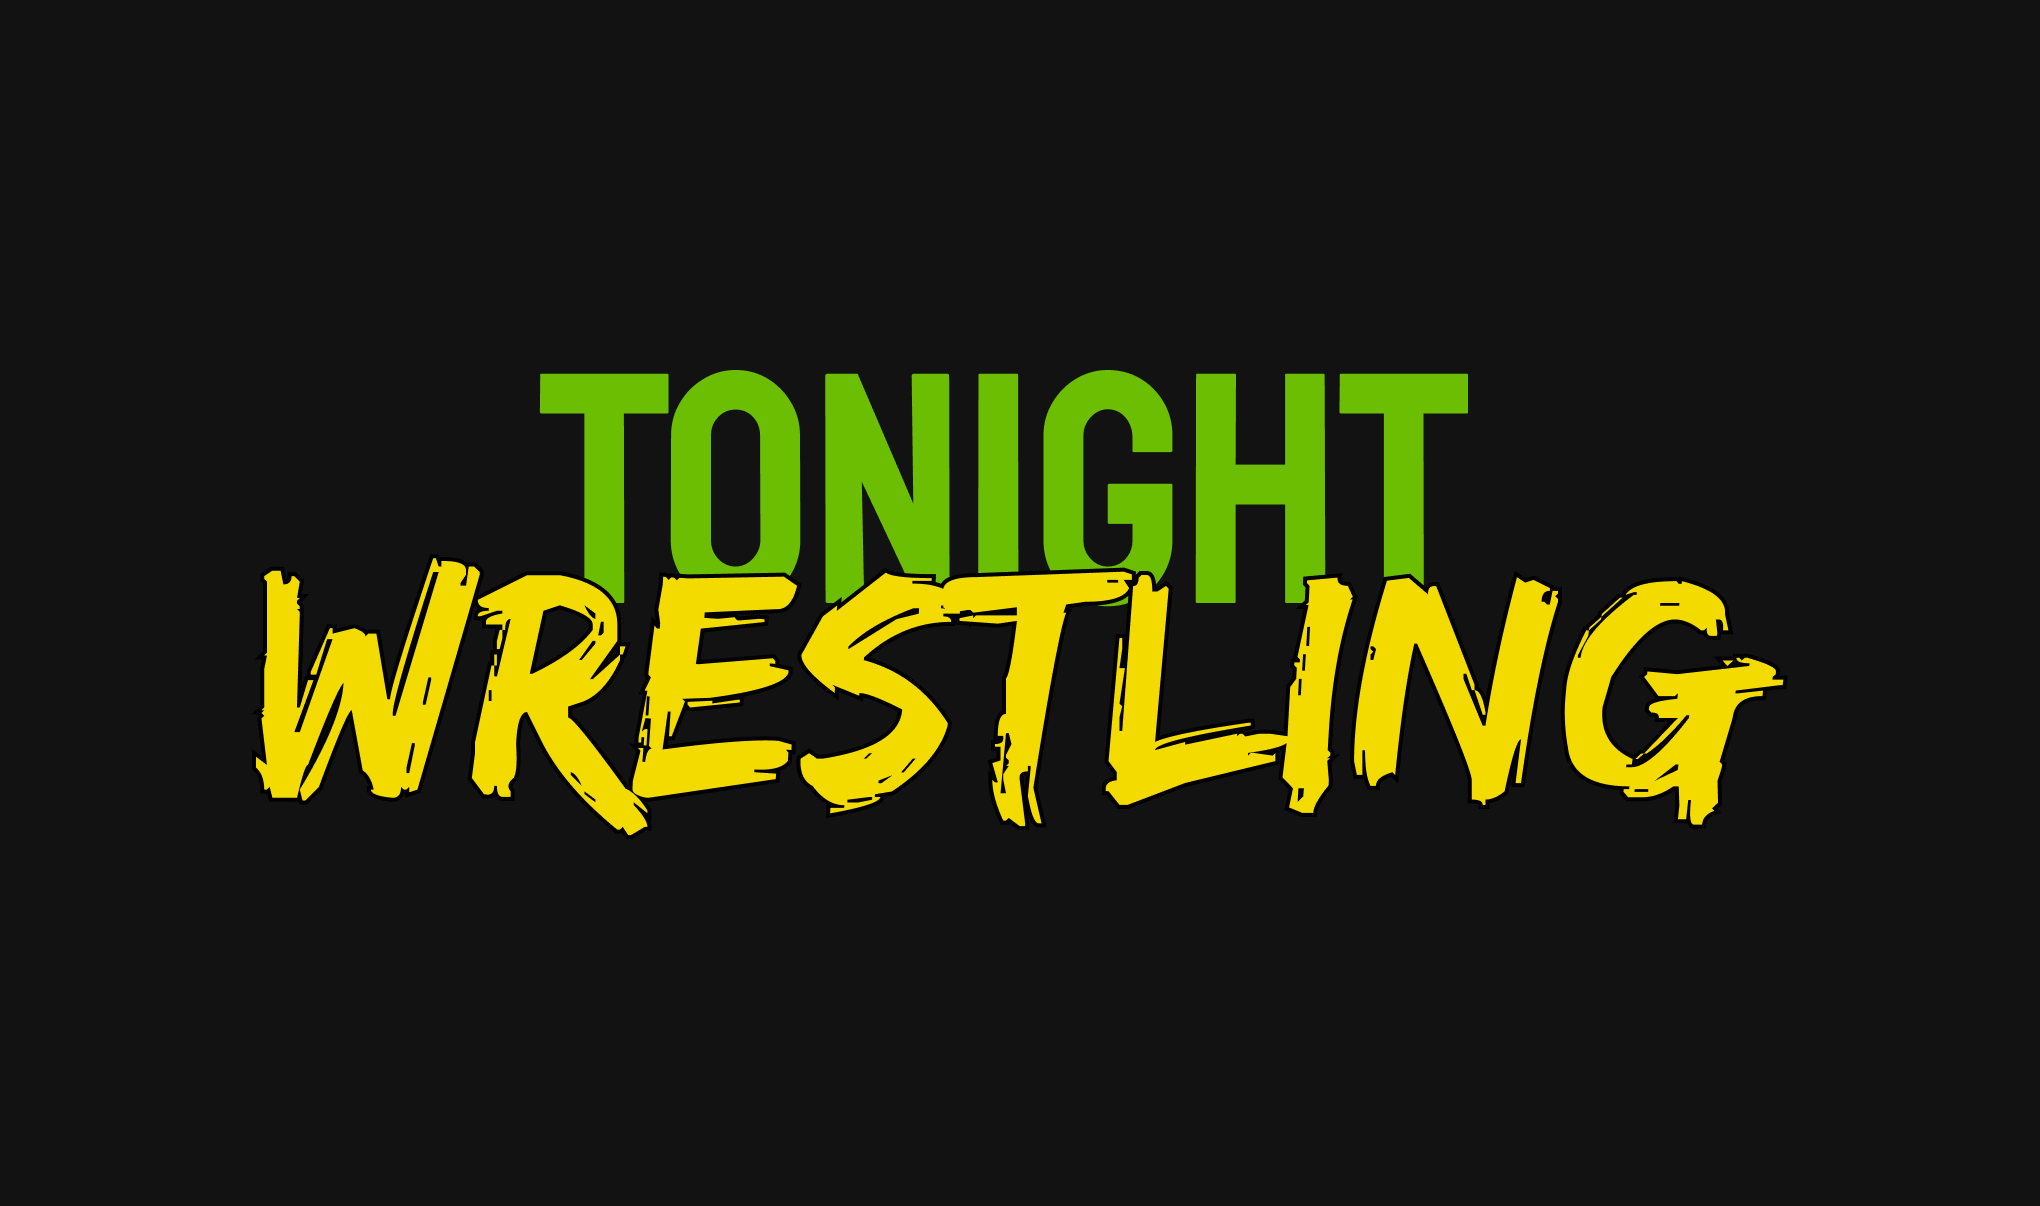 Screenshot of Tonight Wrestling project